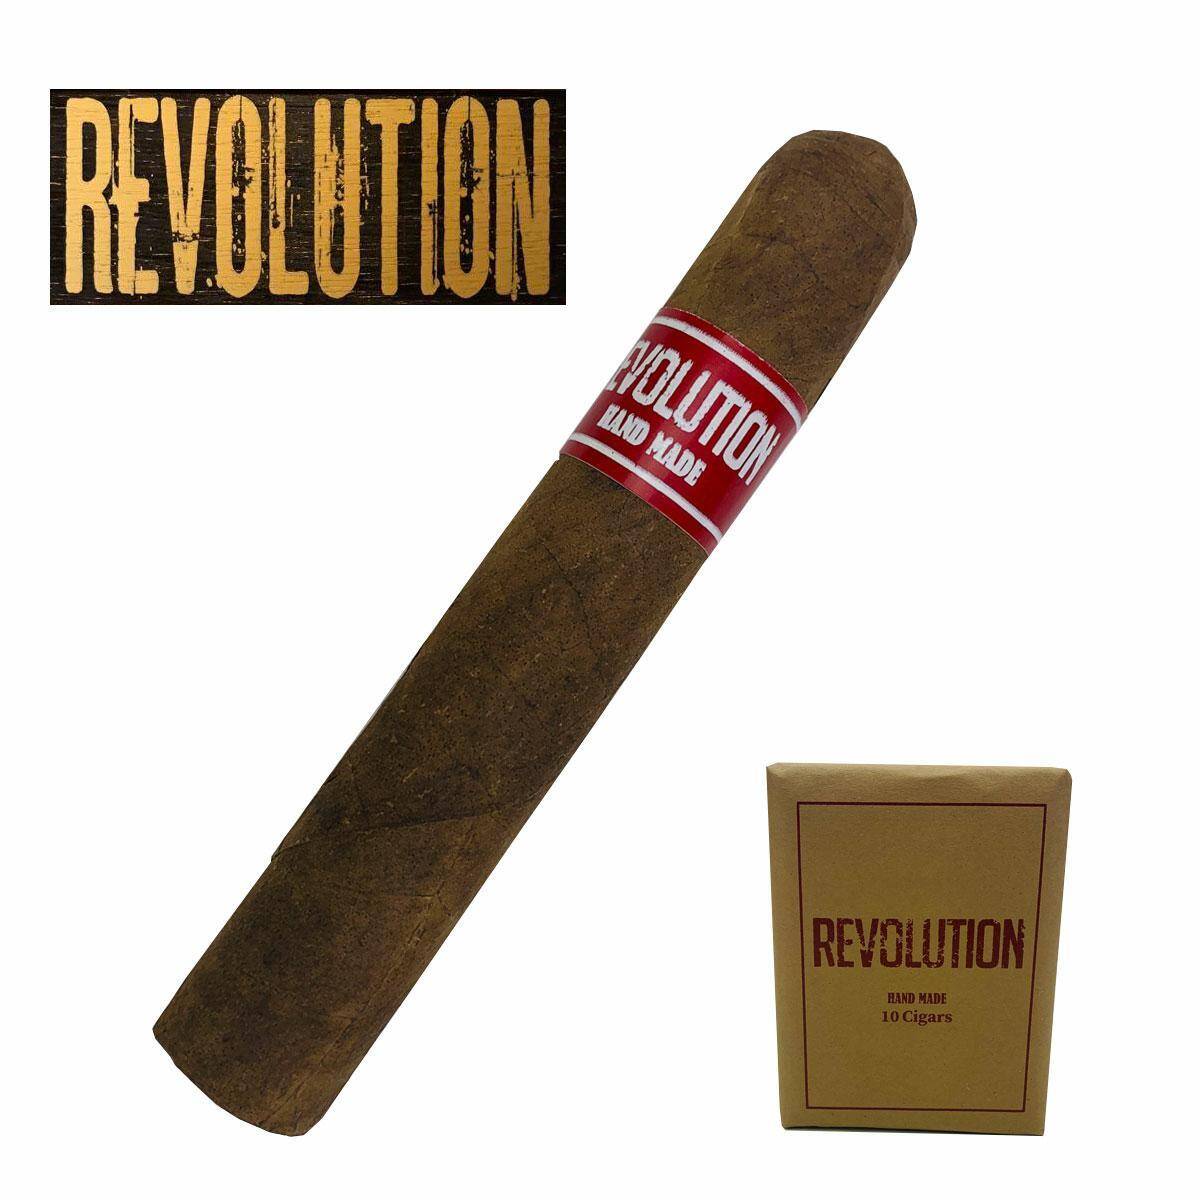 Revolution - Short Robusto /1